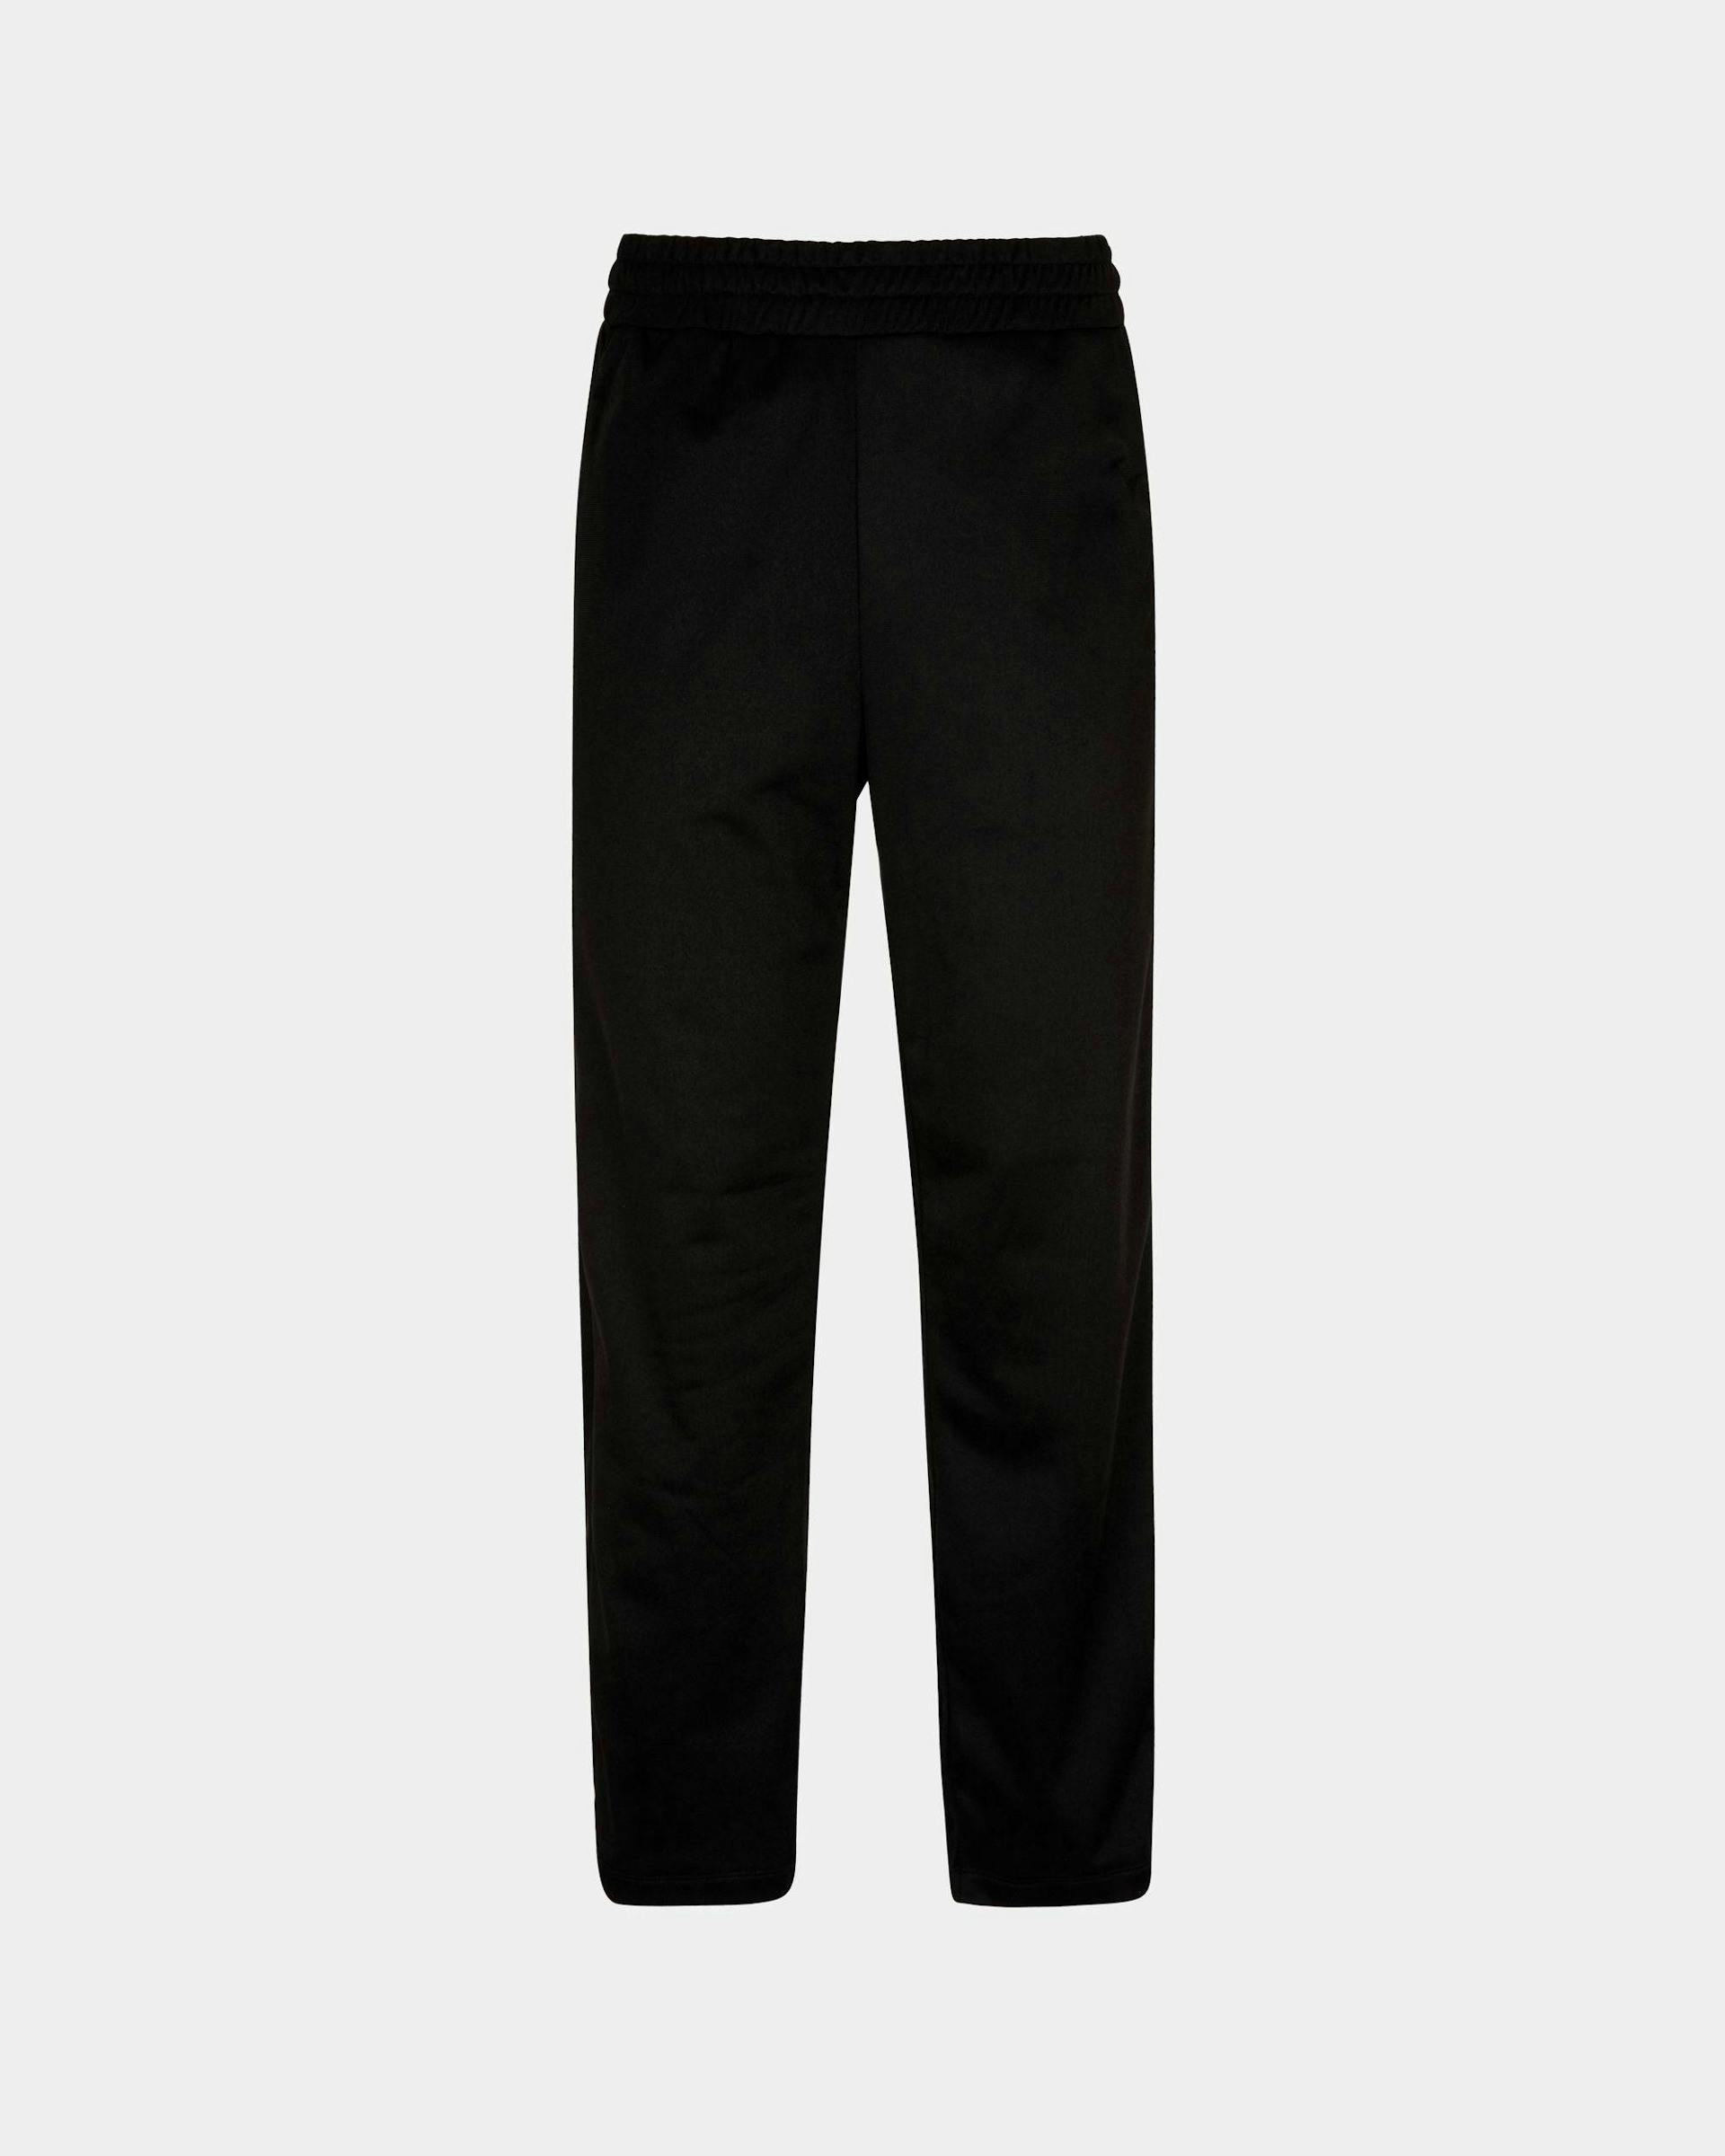 Men's Sweatpants In Black | Bally | Still Life Front